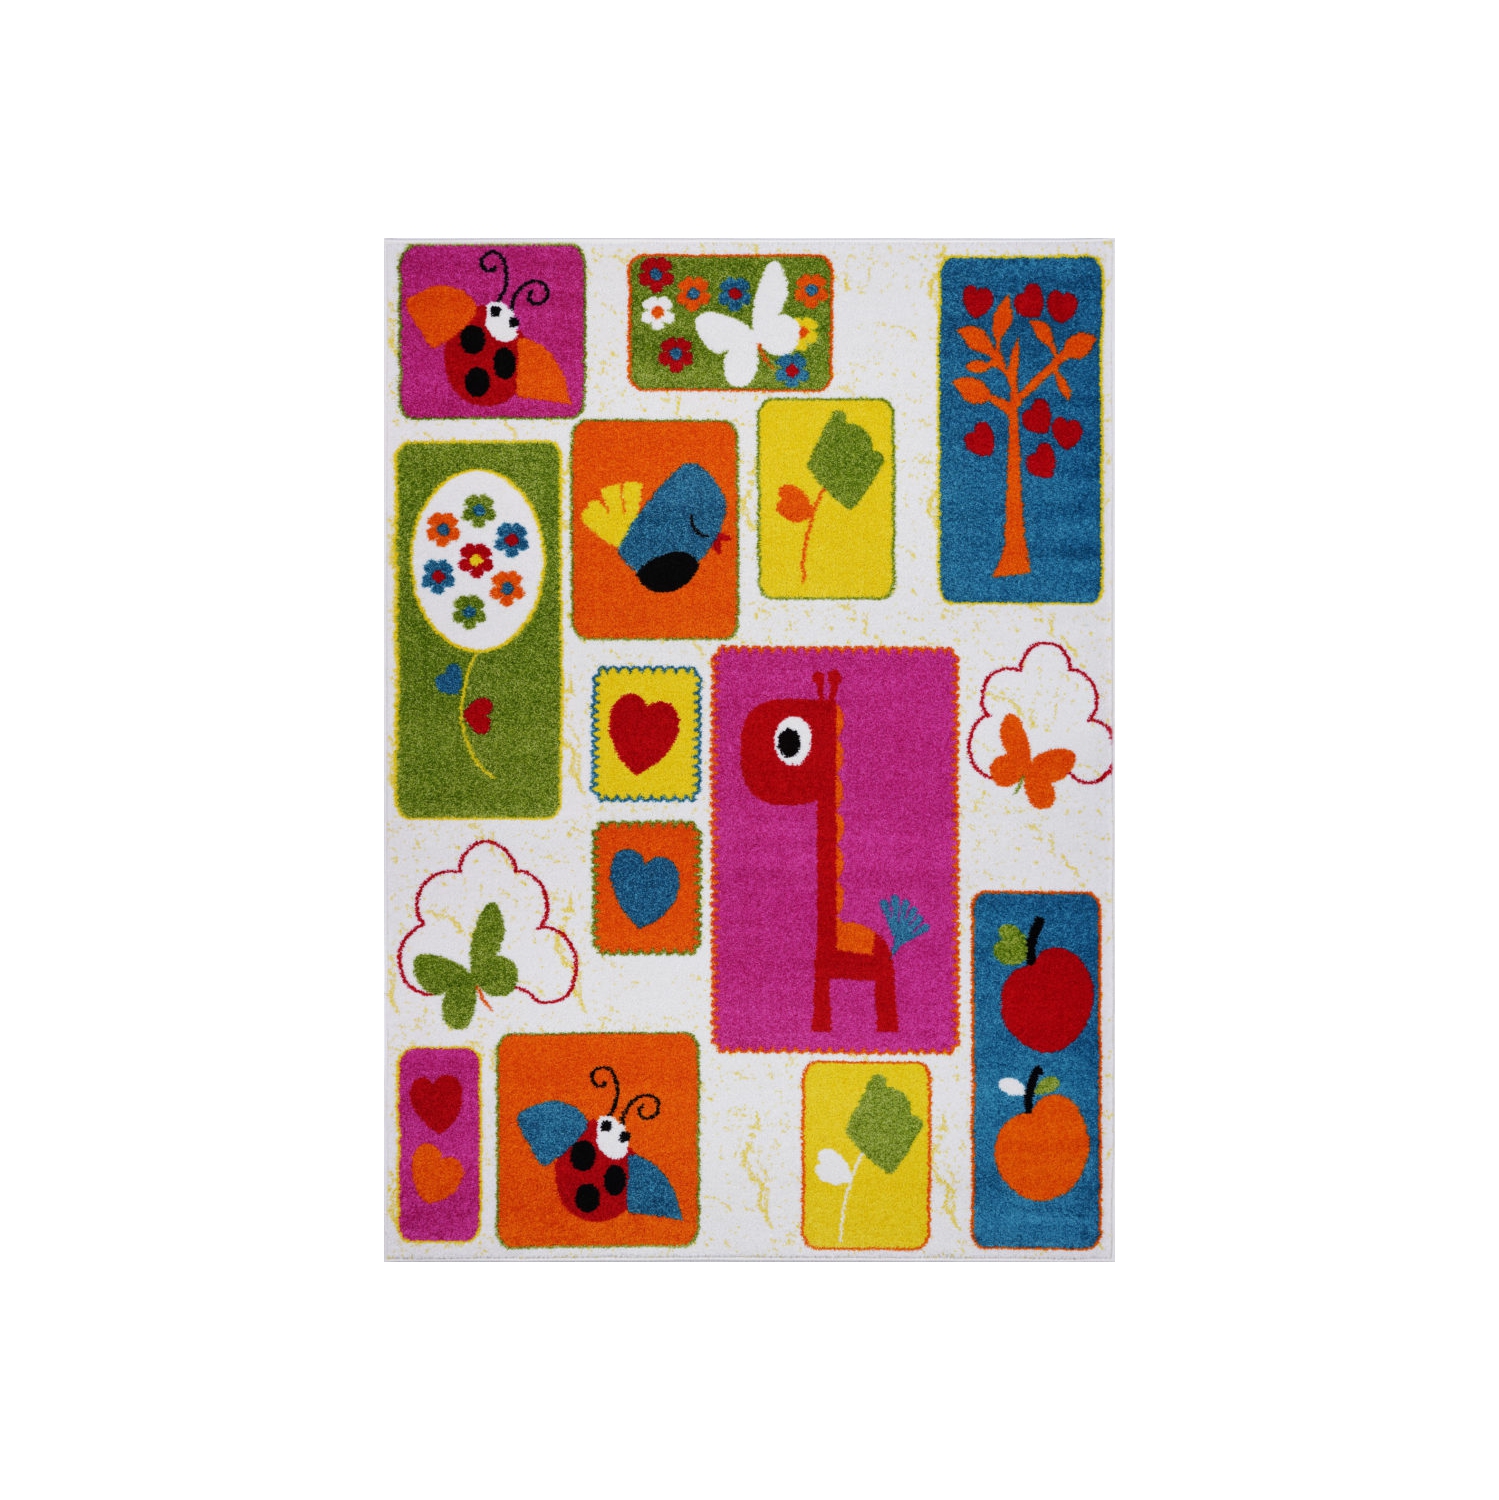 Ladole Rugs Cream and Multicolor Nature Theme Kids Area Rug Carpet, 5x7